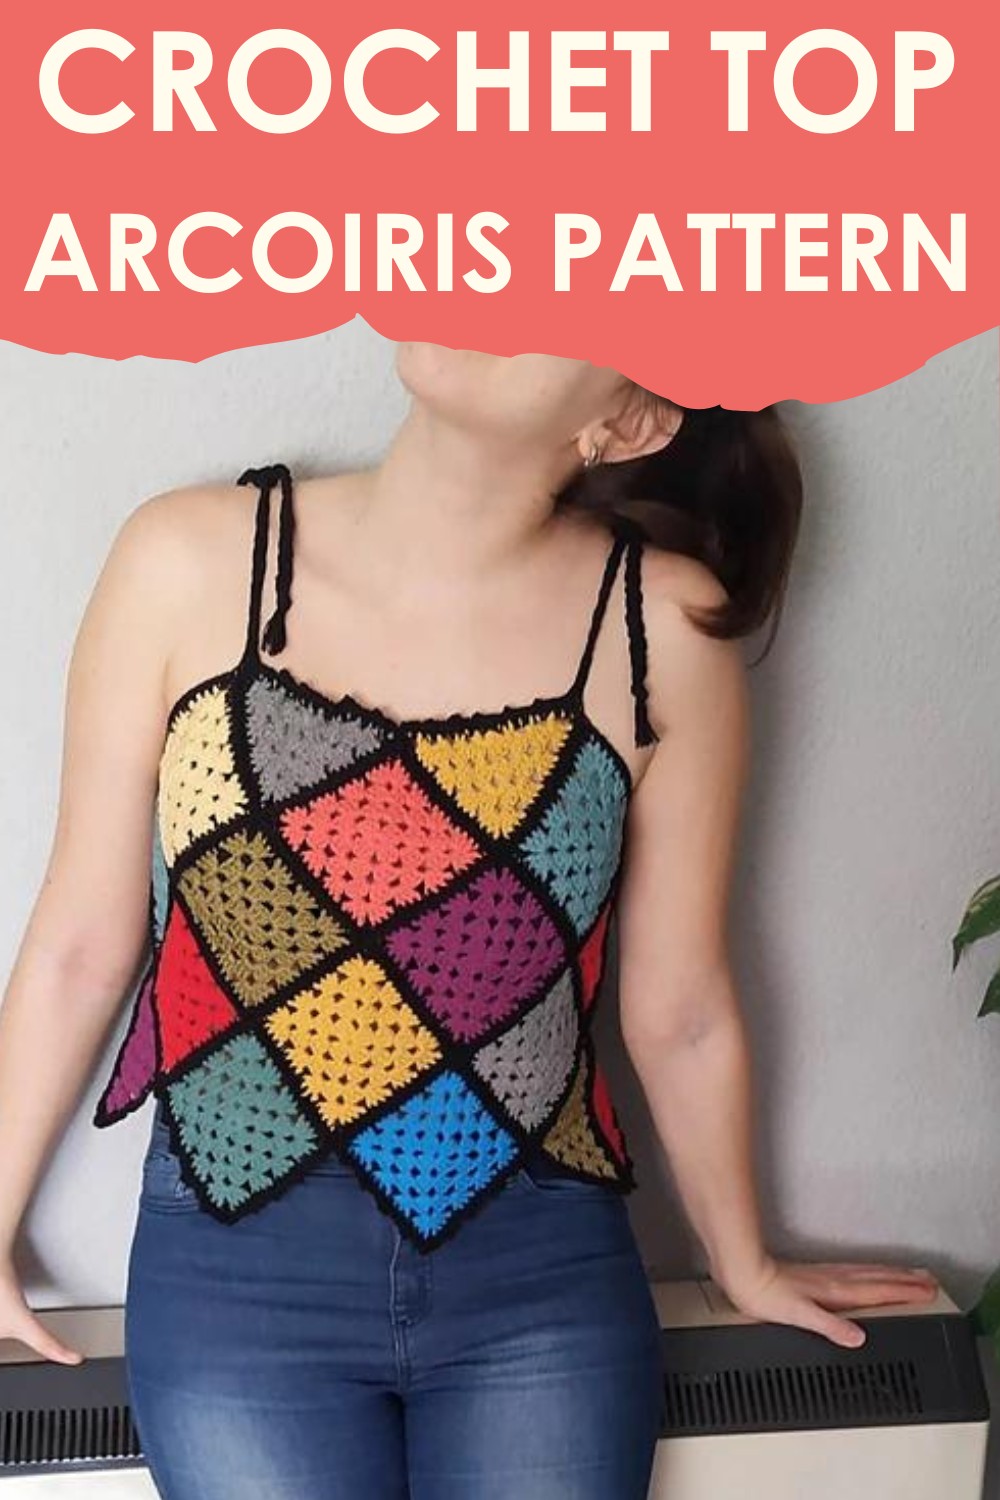 Crochet Top Arcoiris Pattern